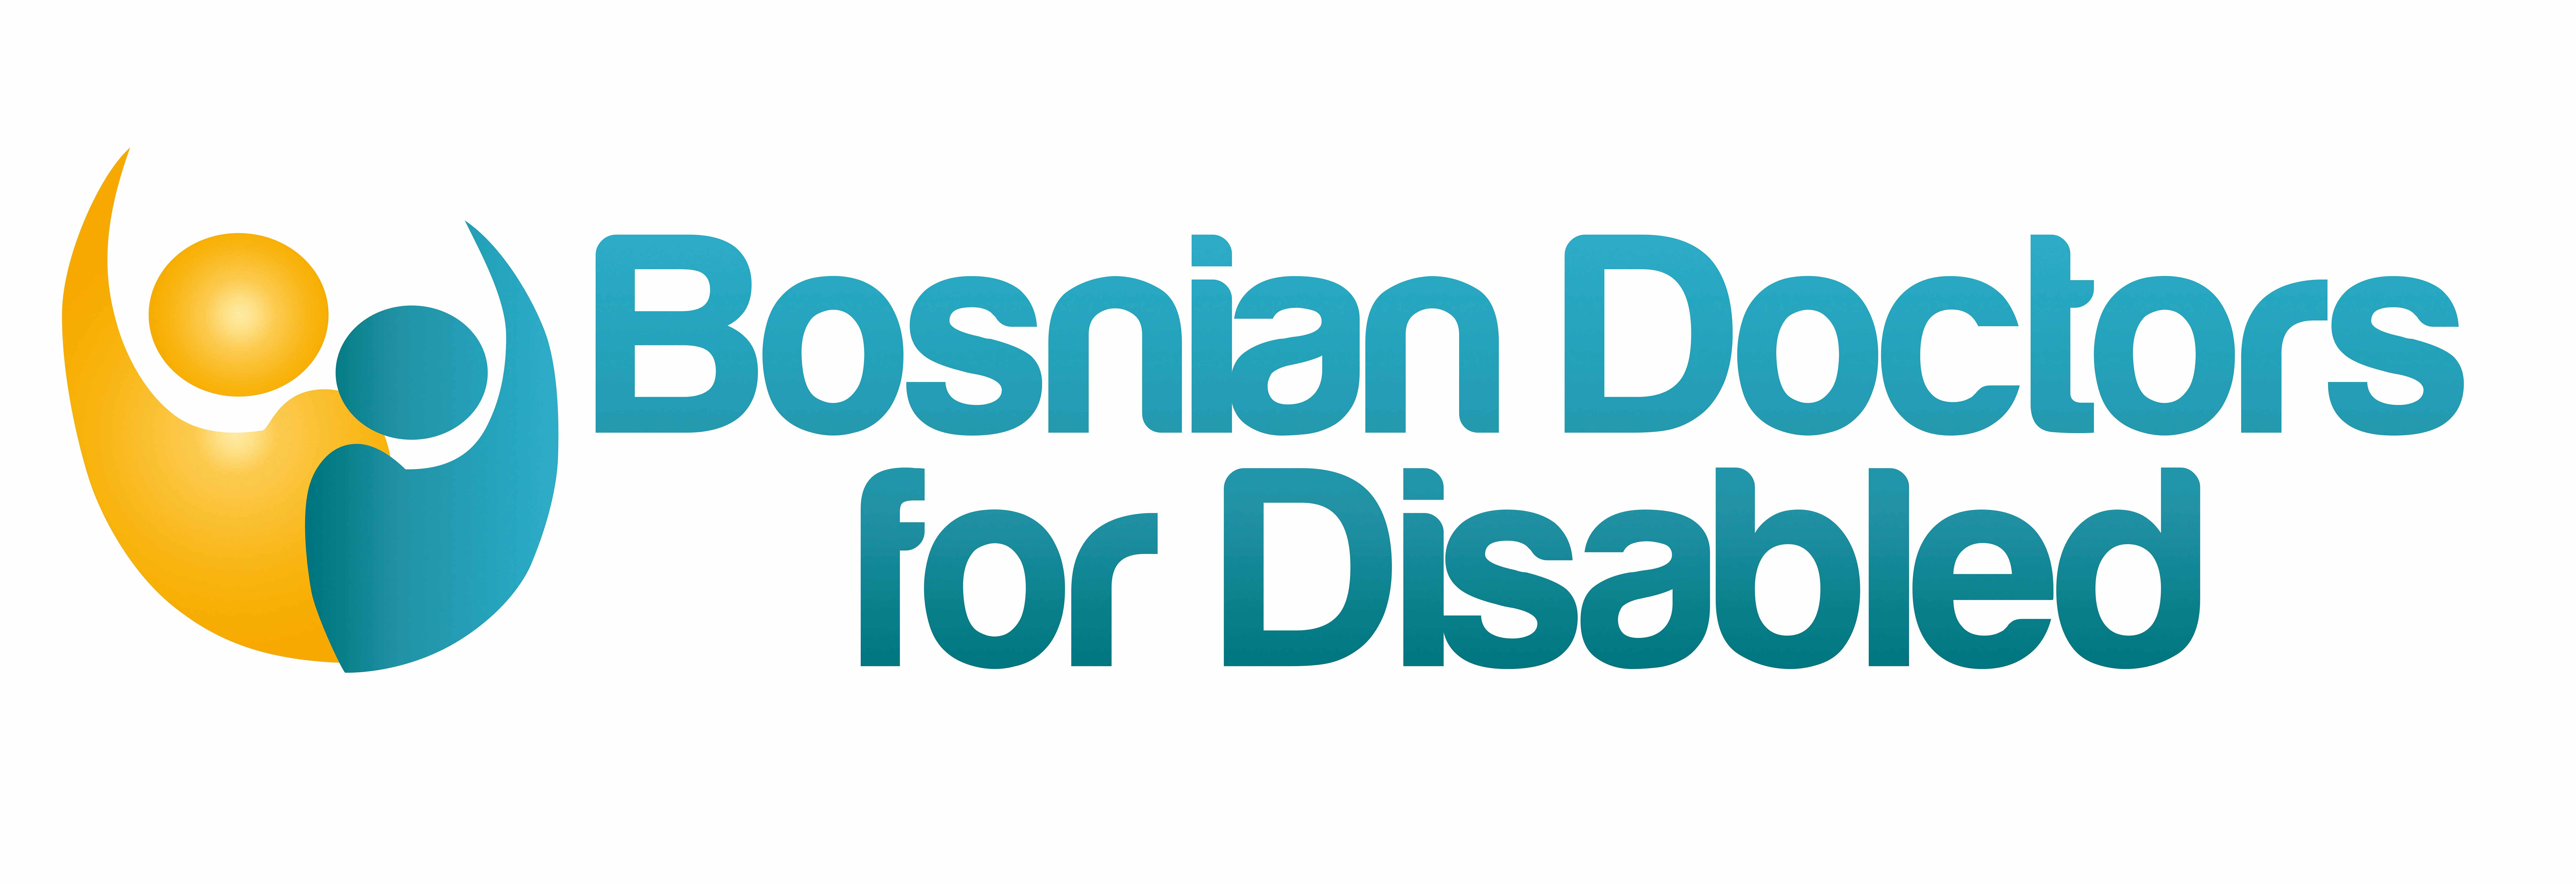 Bosnian Doctors for Disabled logo